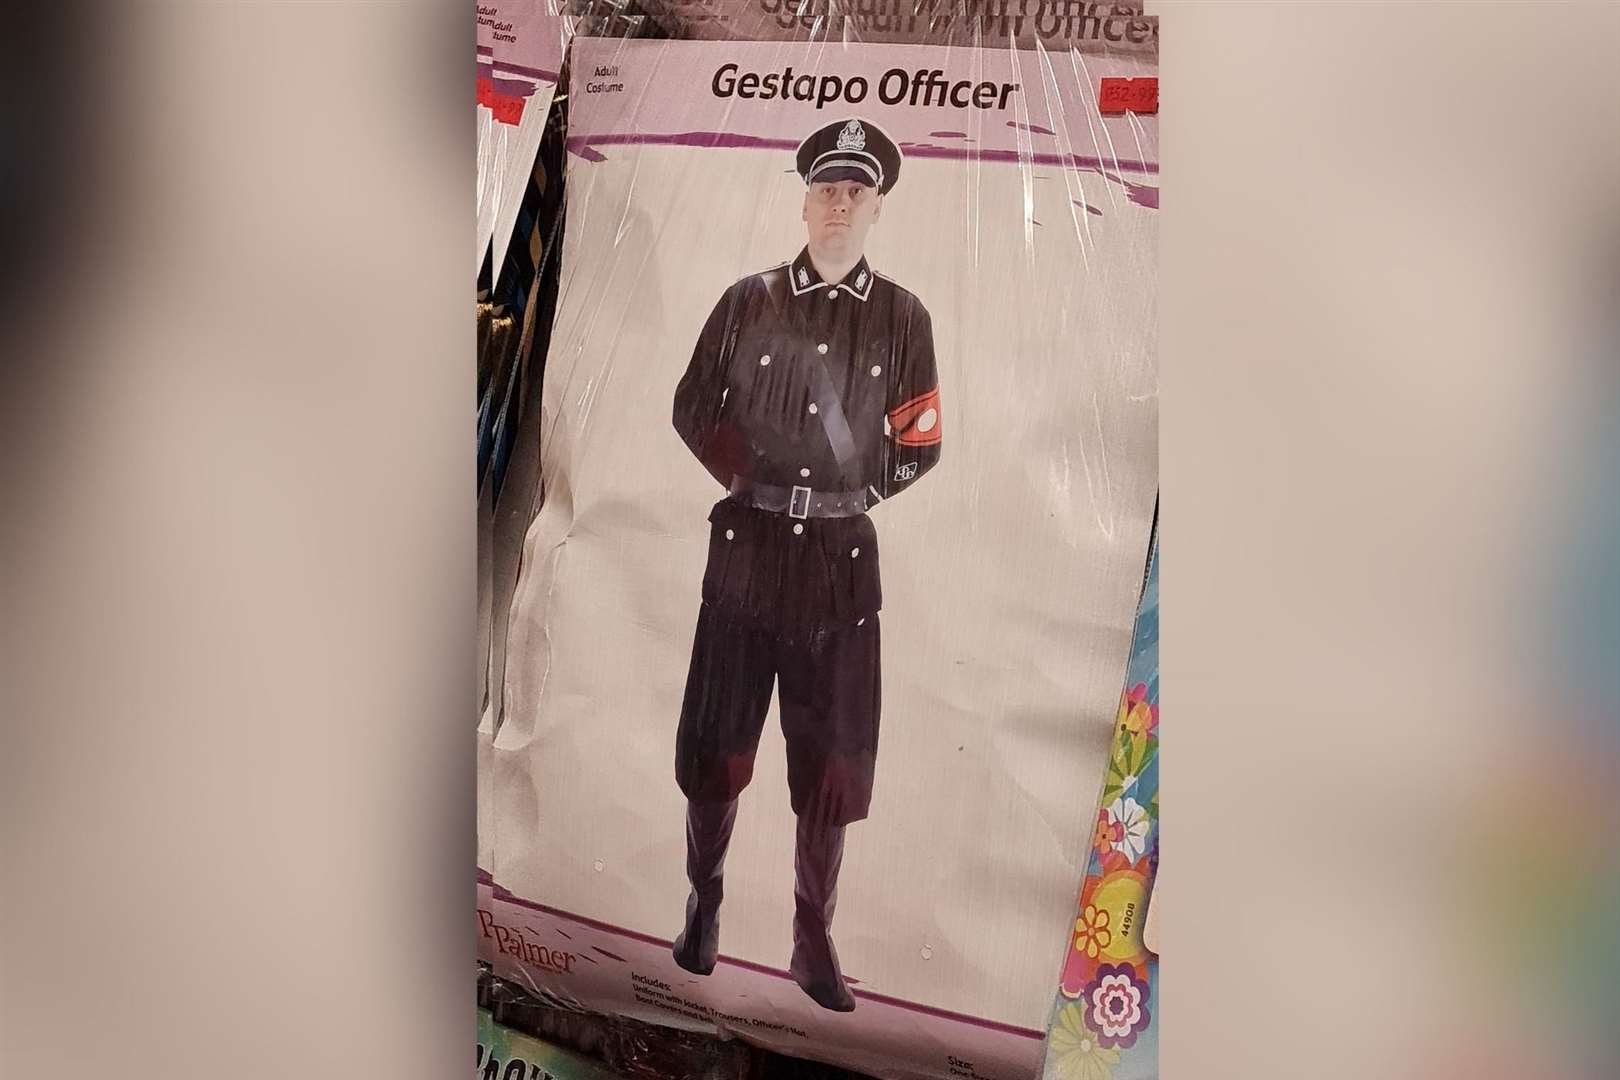 The 'insensitive' Gestapo uniform